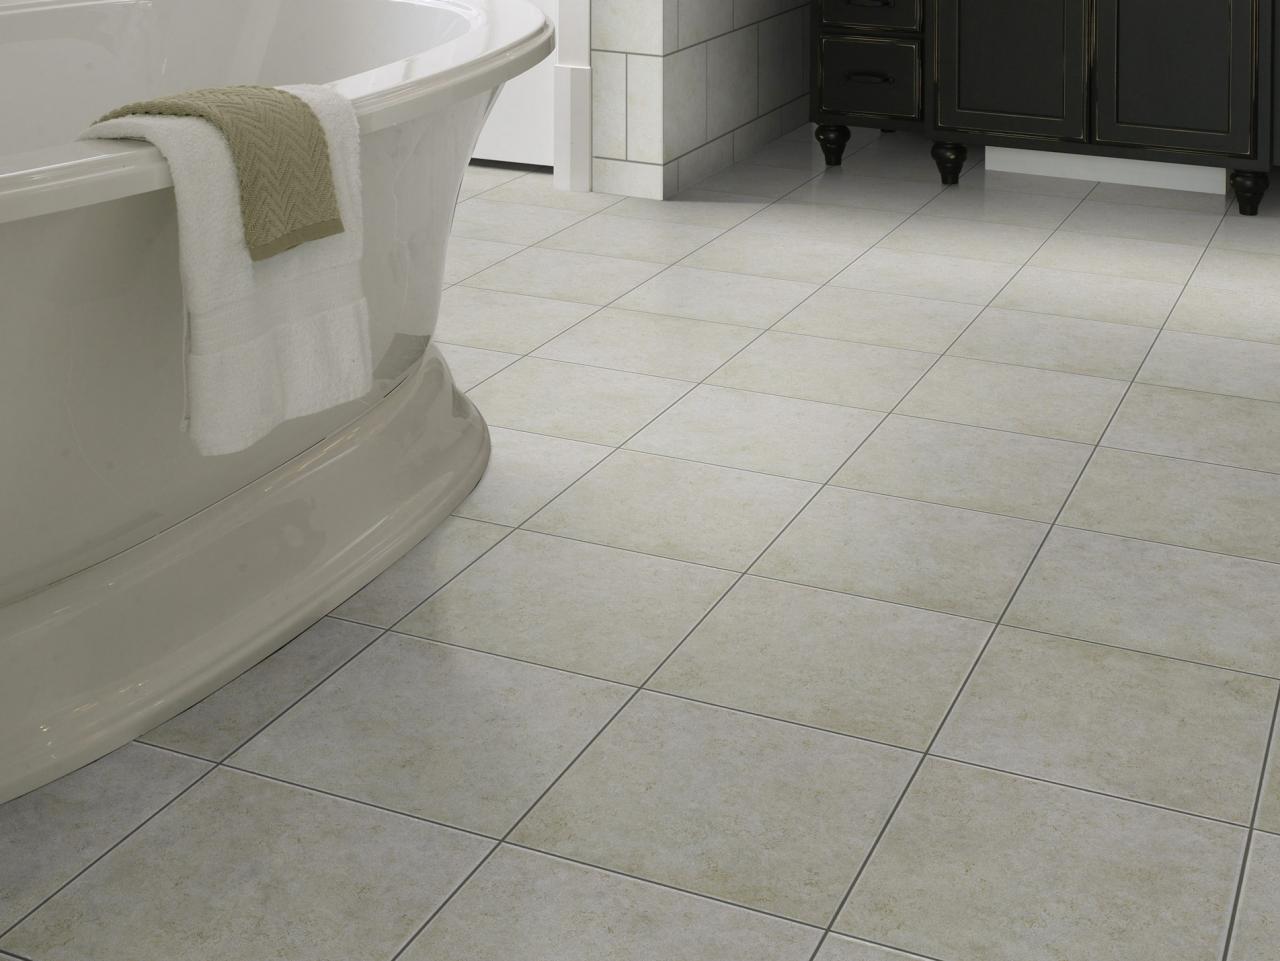 Why Homeowners Love Ceramic Tile, Classic Bathroom Floor Tile Patterns